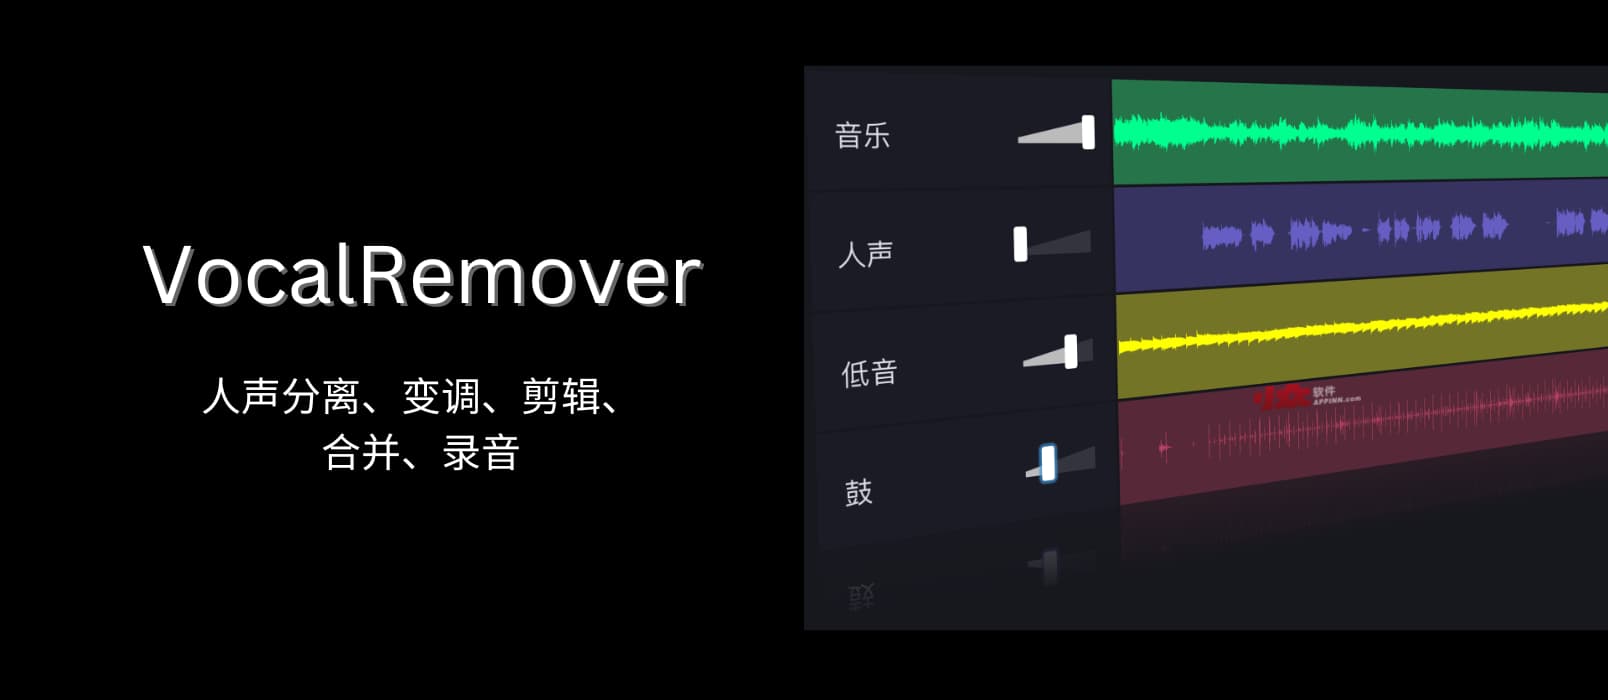 VocalRemover - 强大的在线音频处理工具：人声分离、变调、剪辑、合并、录音、卡拉OK